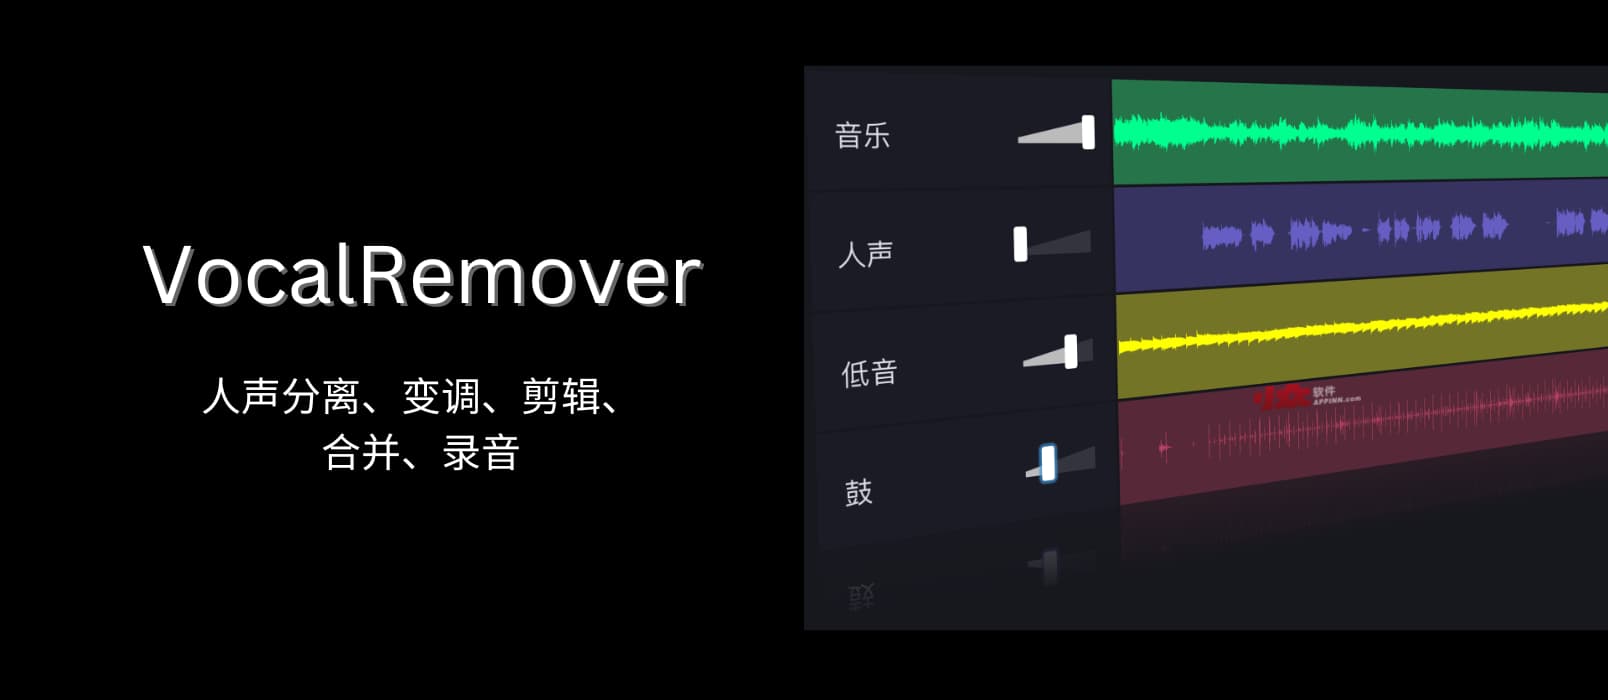 VocalRemover - 强大的在线音频处理工具：人声分离、变调、剪辑、合并、录音、卡拉OK